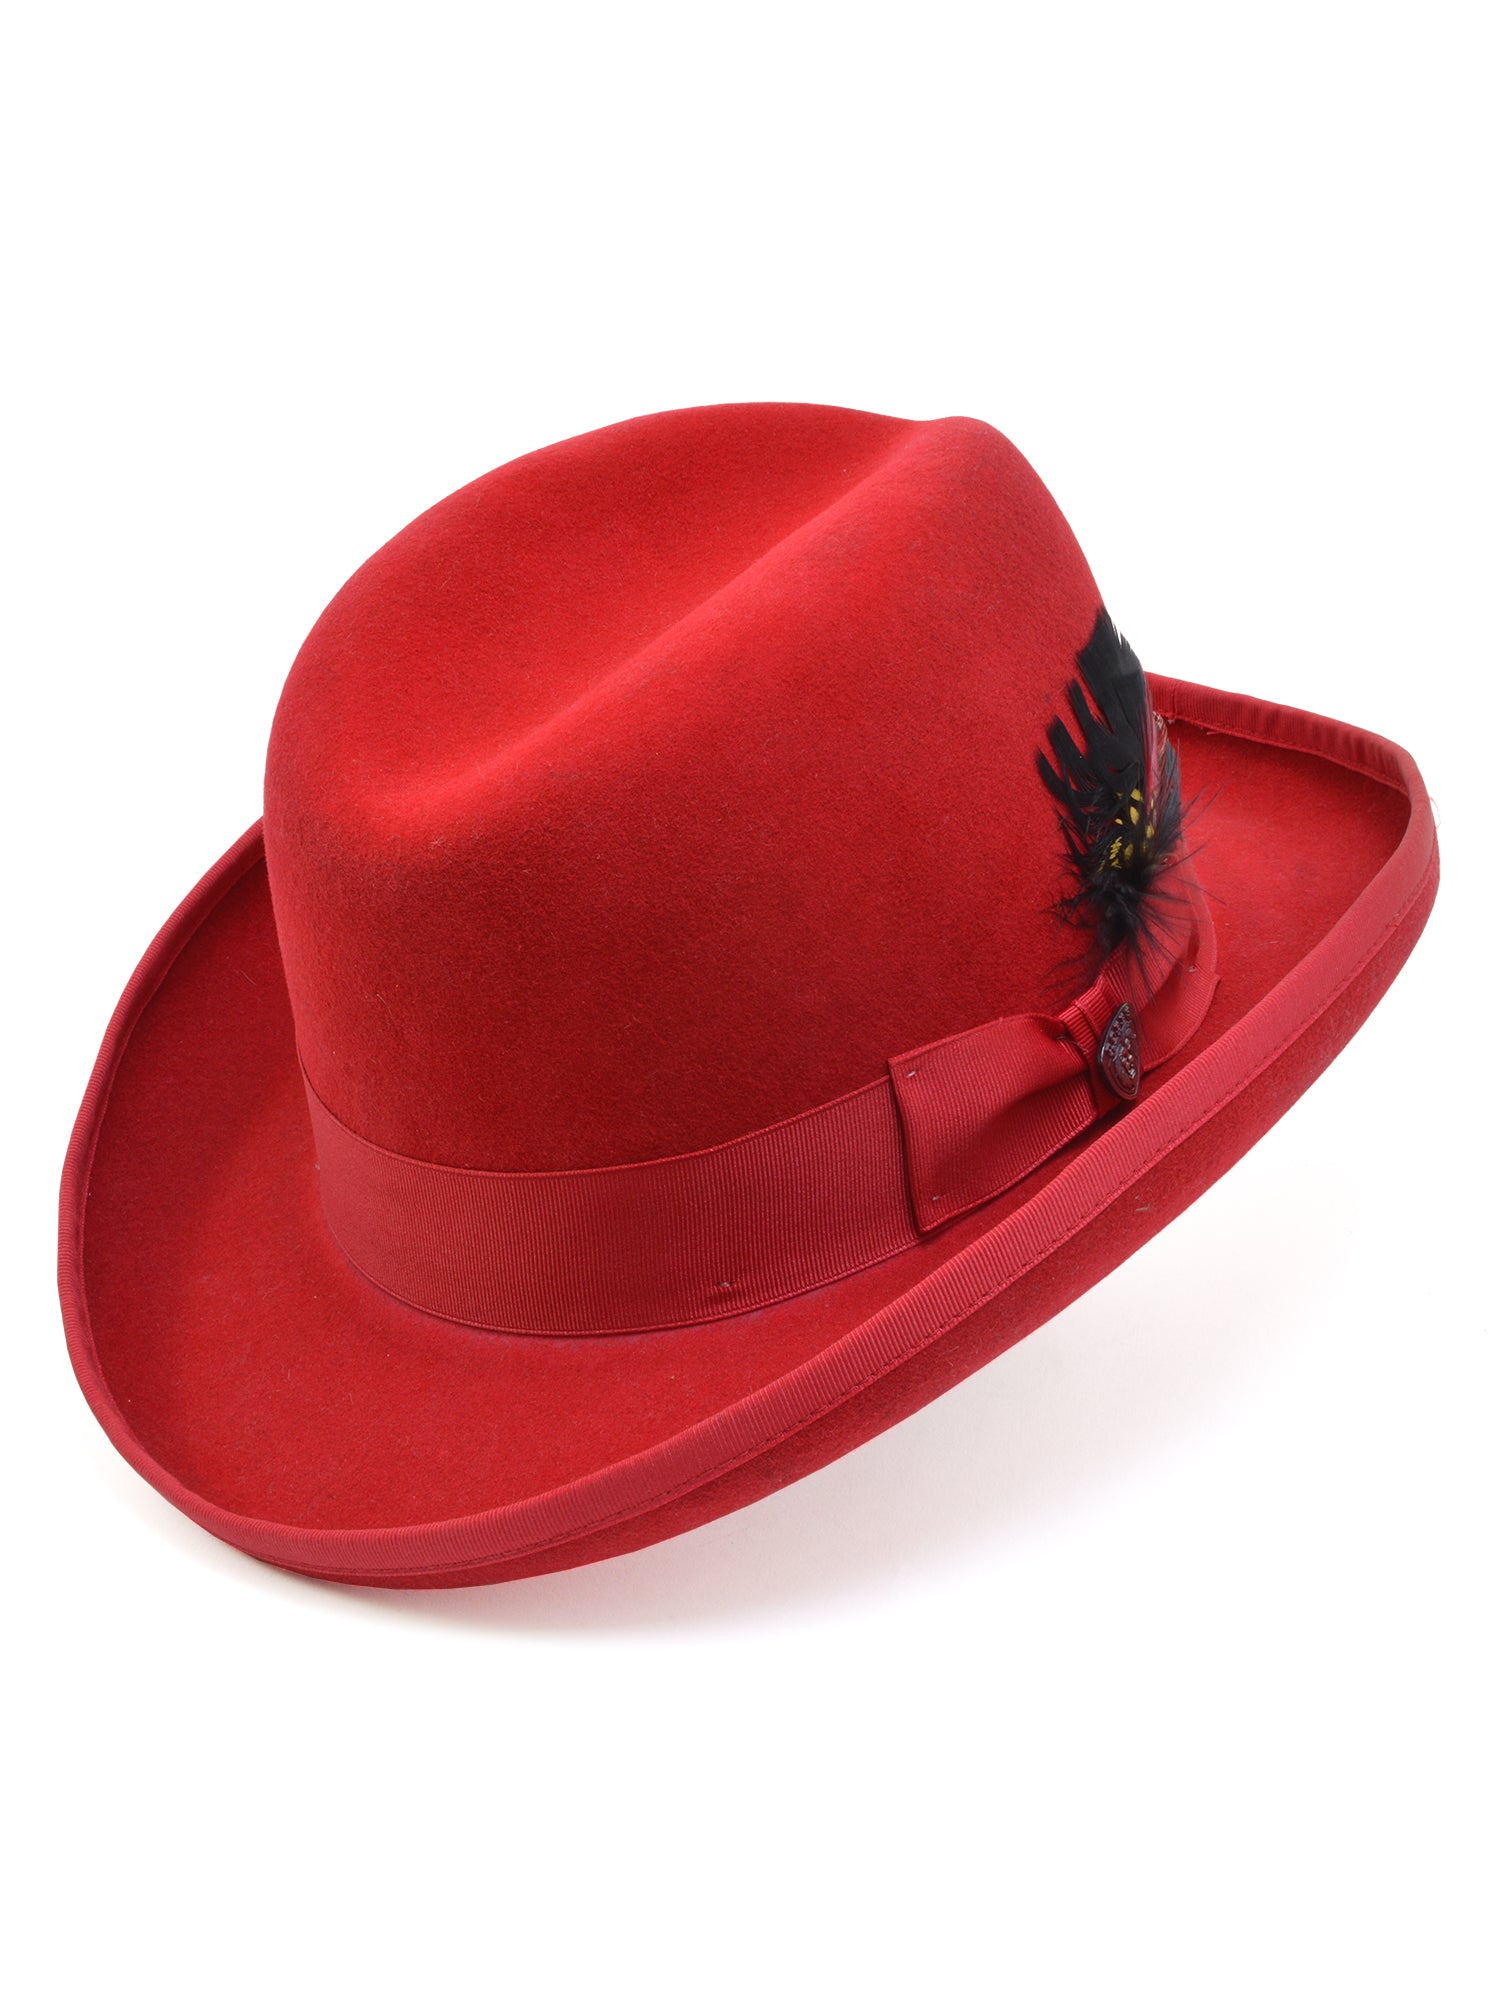 Dobbs 100% Wool Felt Fleetwood Hats in Red